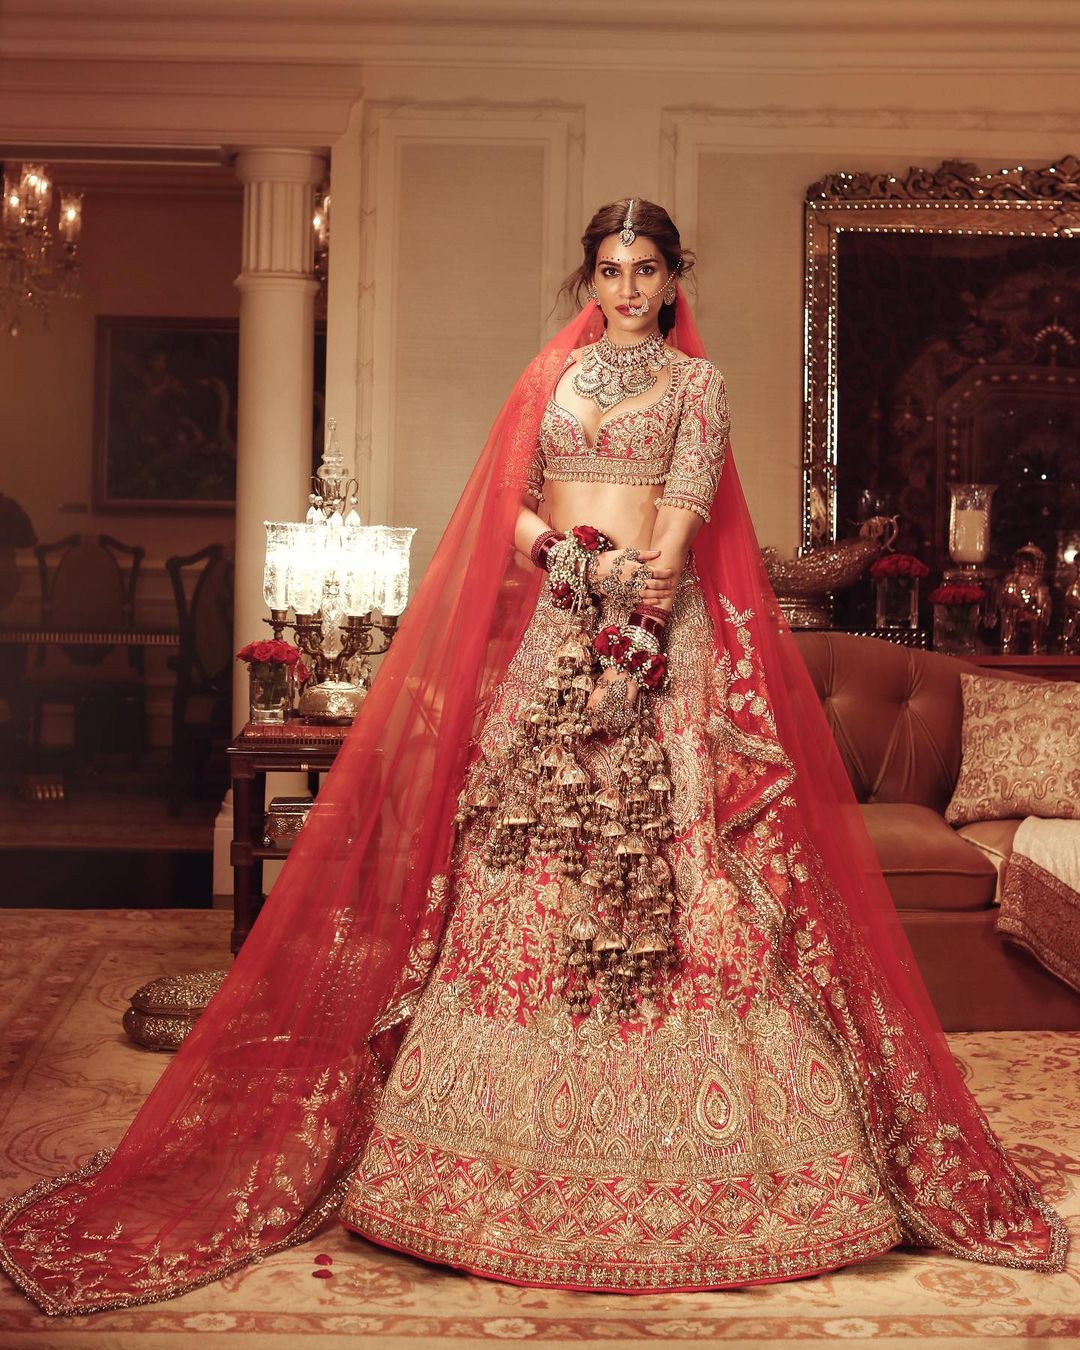 Kriti Sanon made a spectacular bride for Manish Malhotra. 